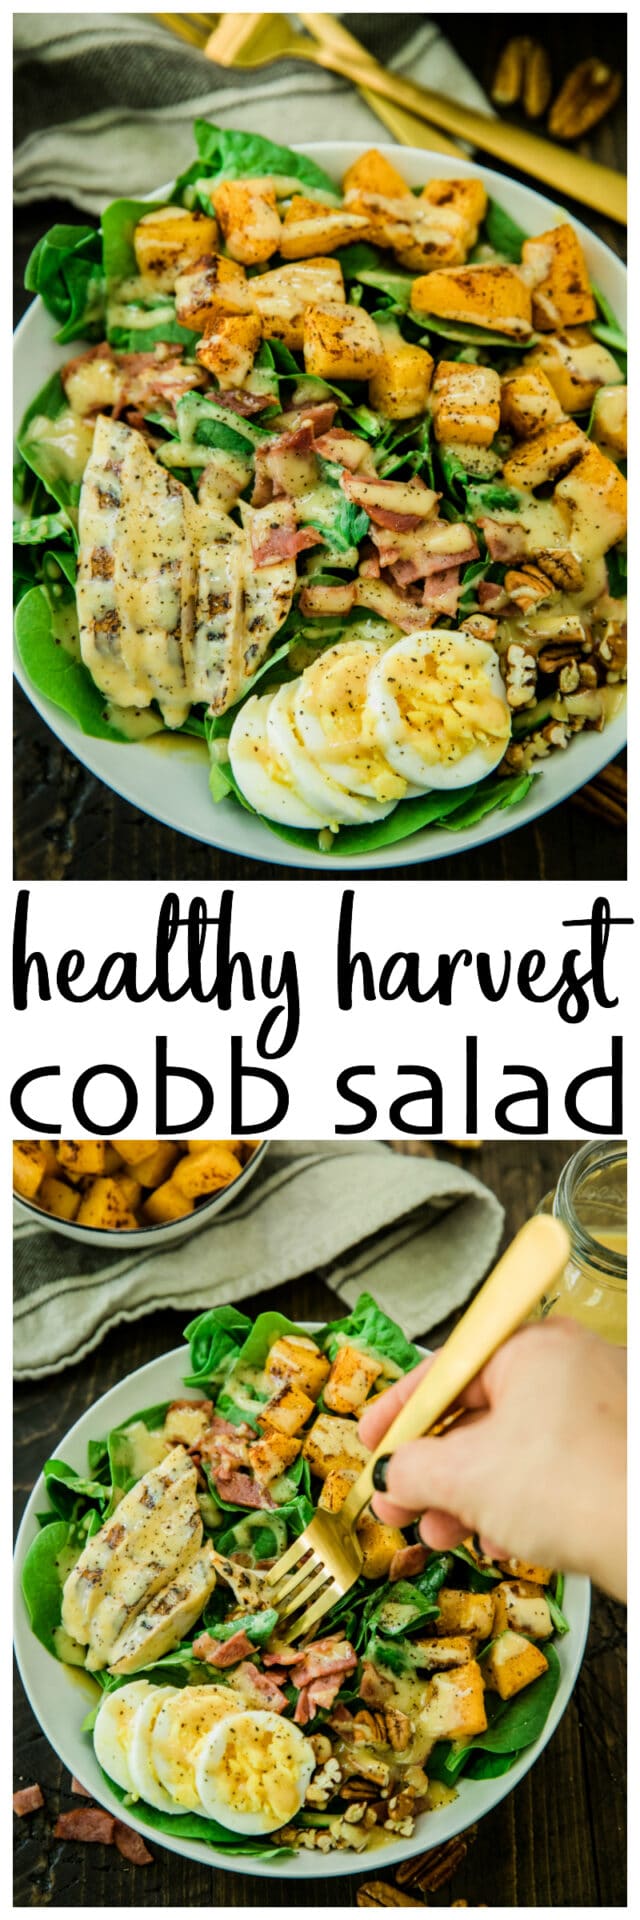 Pinterest image for the Healthy Harvest Cobb Salad